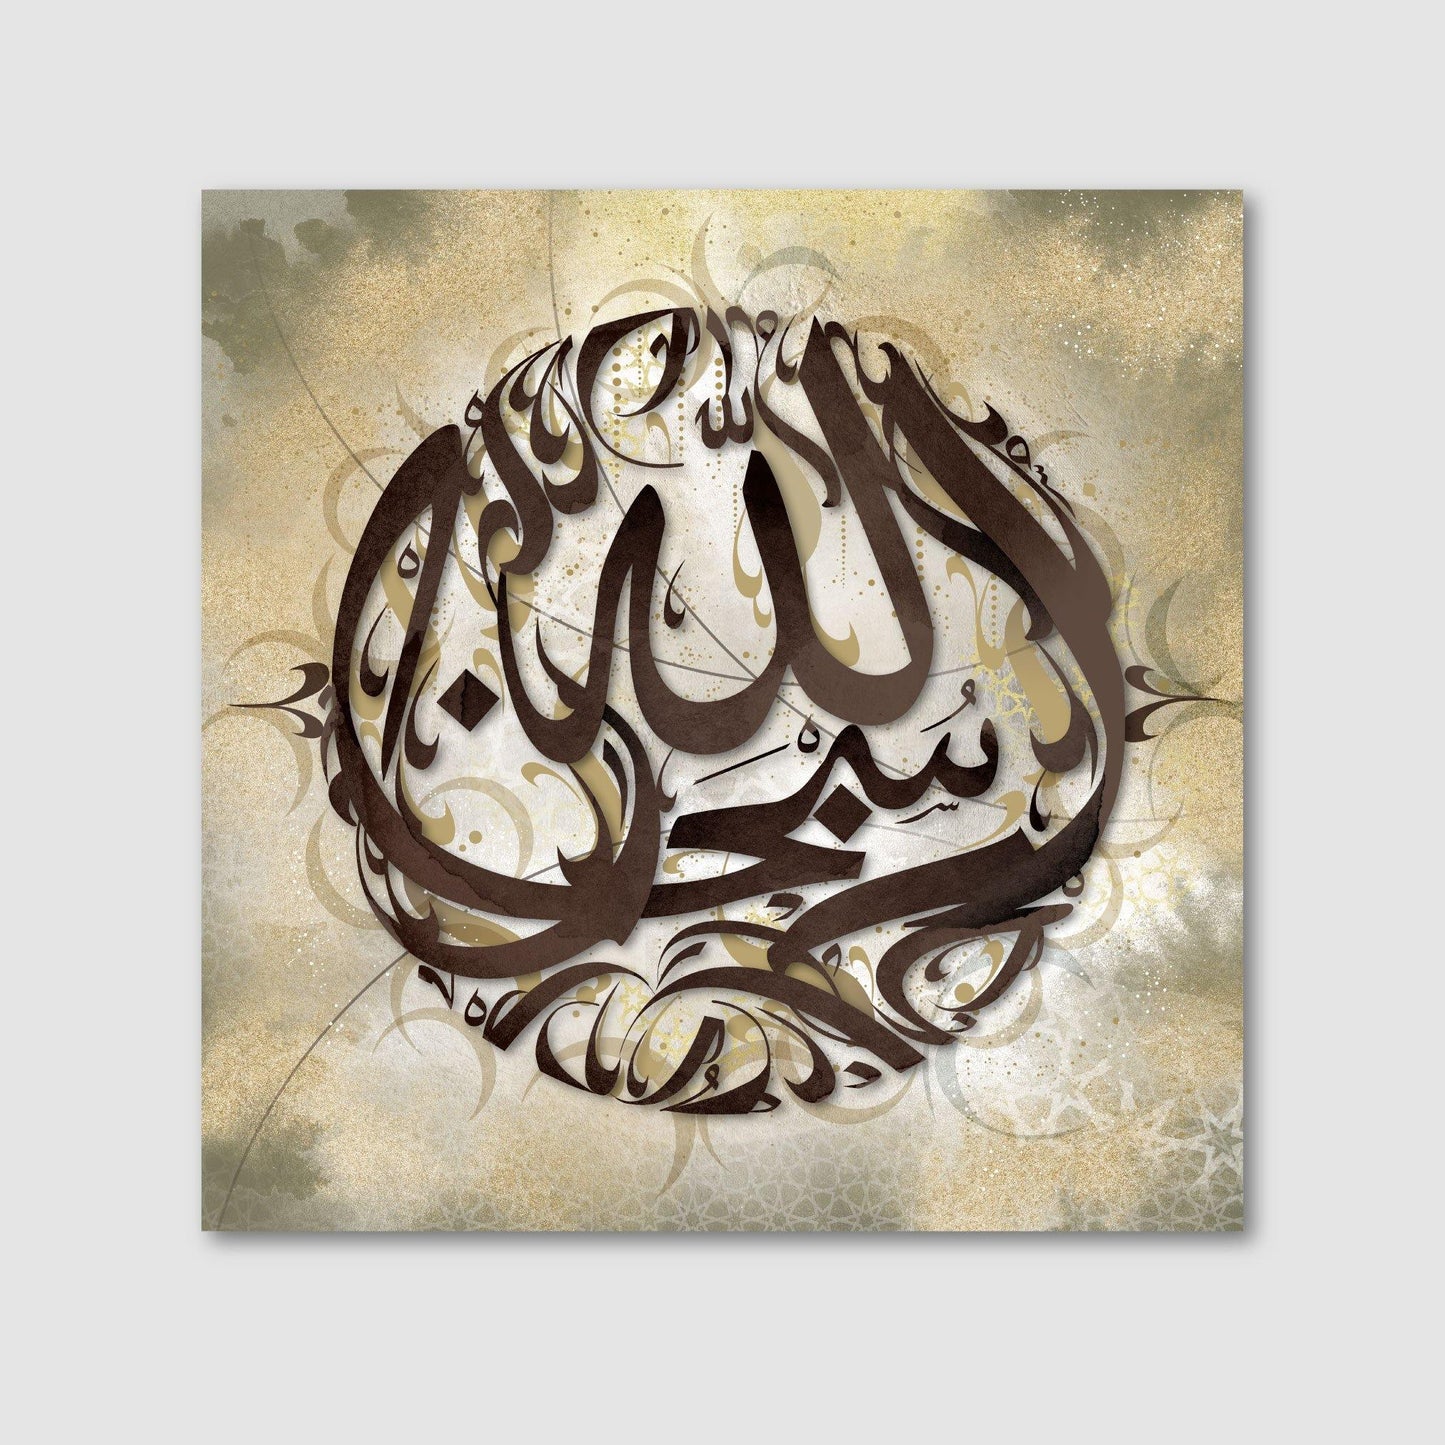 Subhan Allah - The Art Gallery Modern Arabic Calligraphy by Helen Abbas